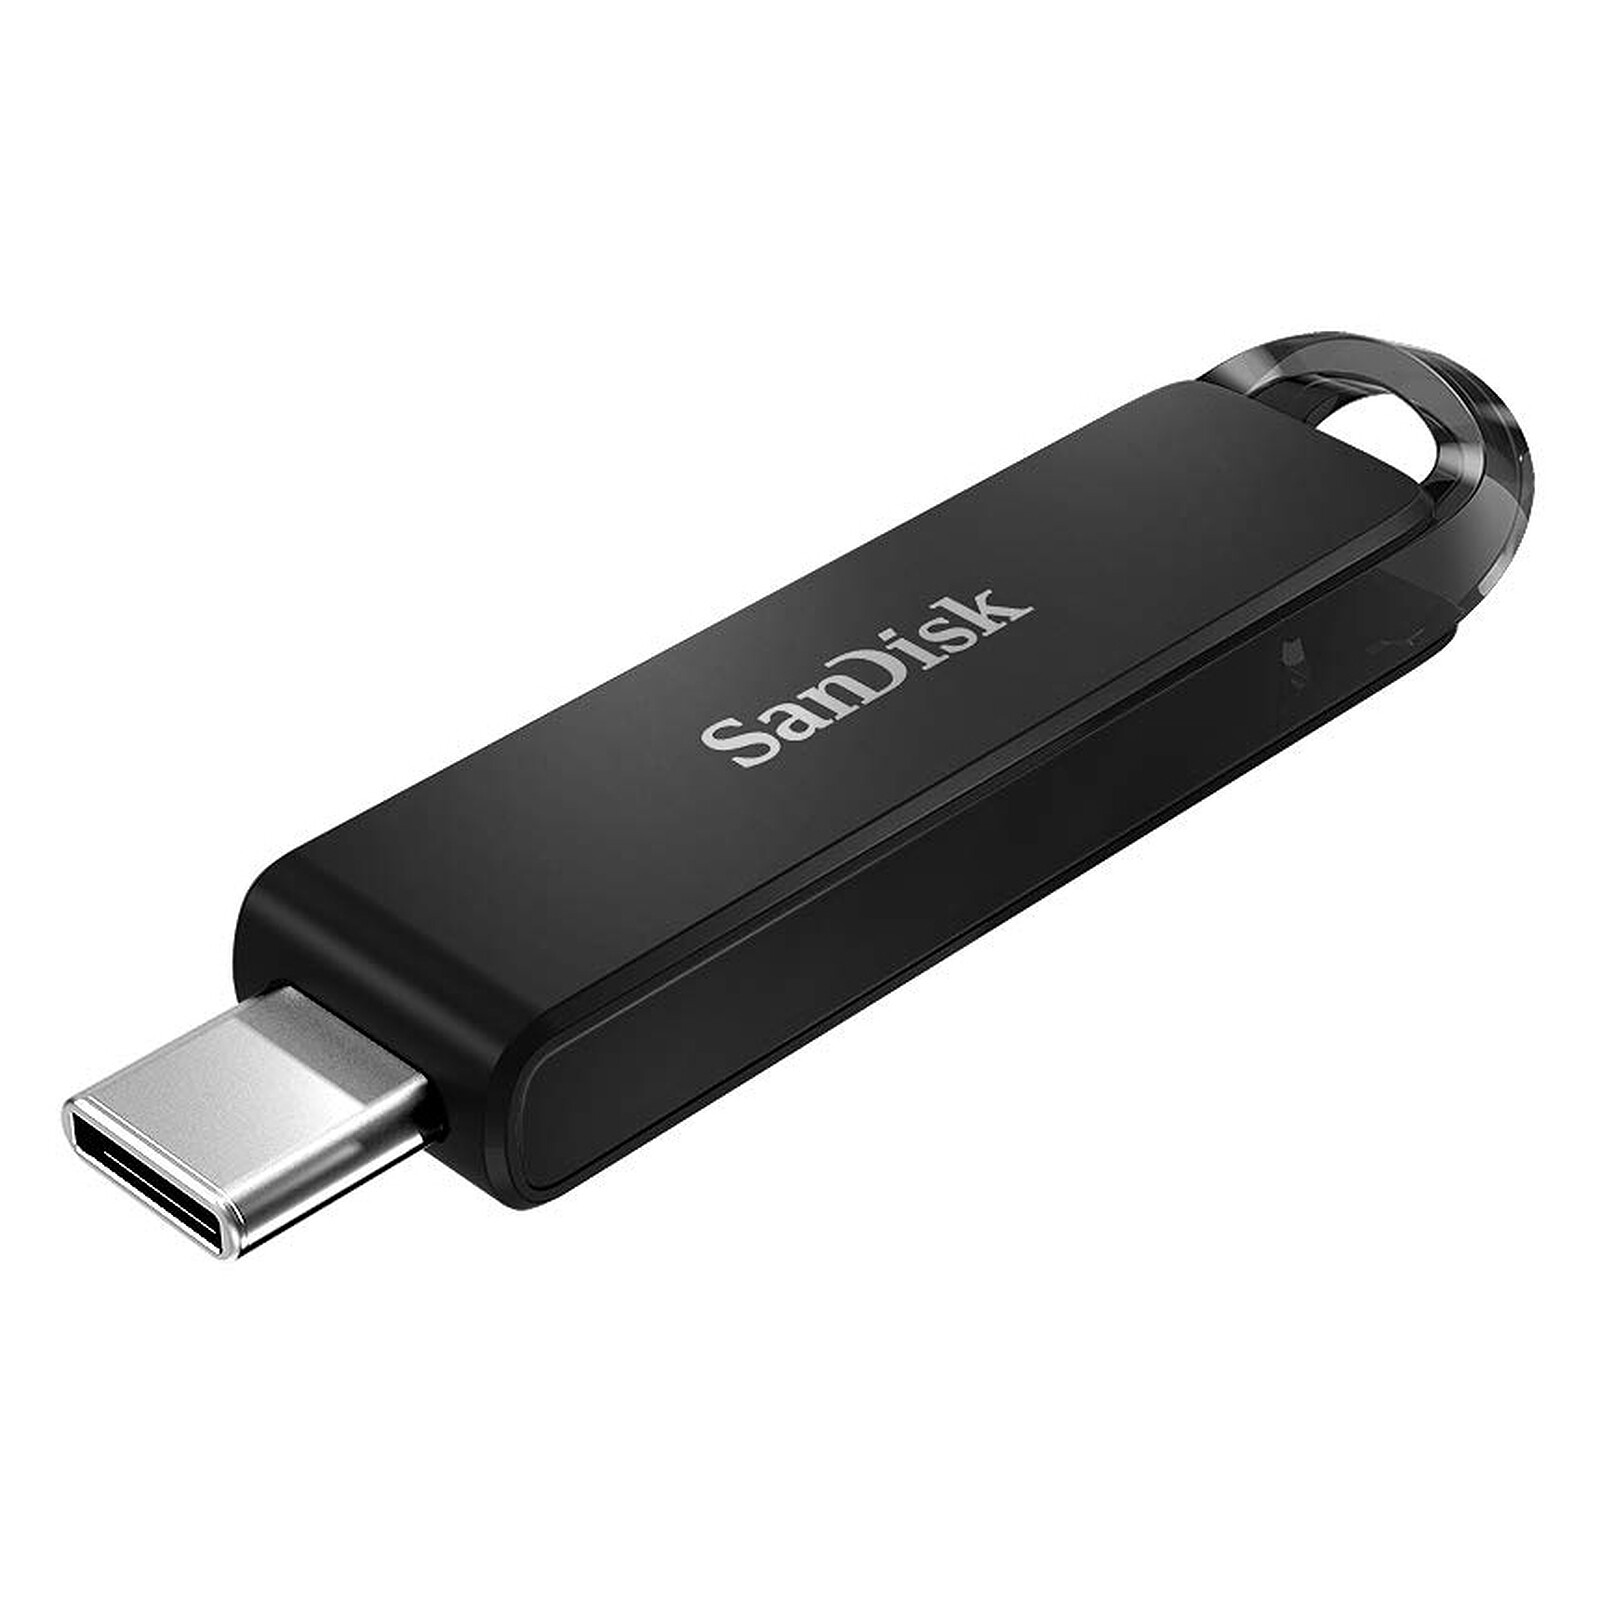 SanDisk Ultra USB 3.0 - 32 Go (Pack de 2) - Clé USB Sandisk sur